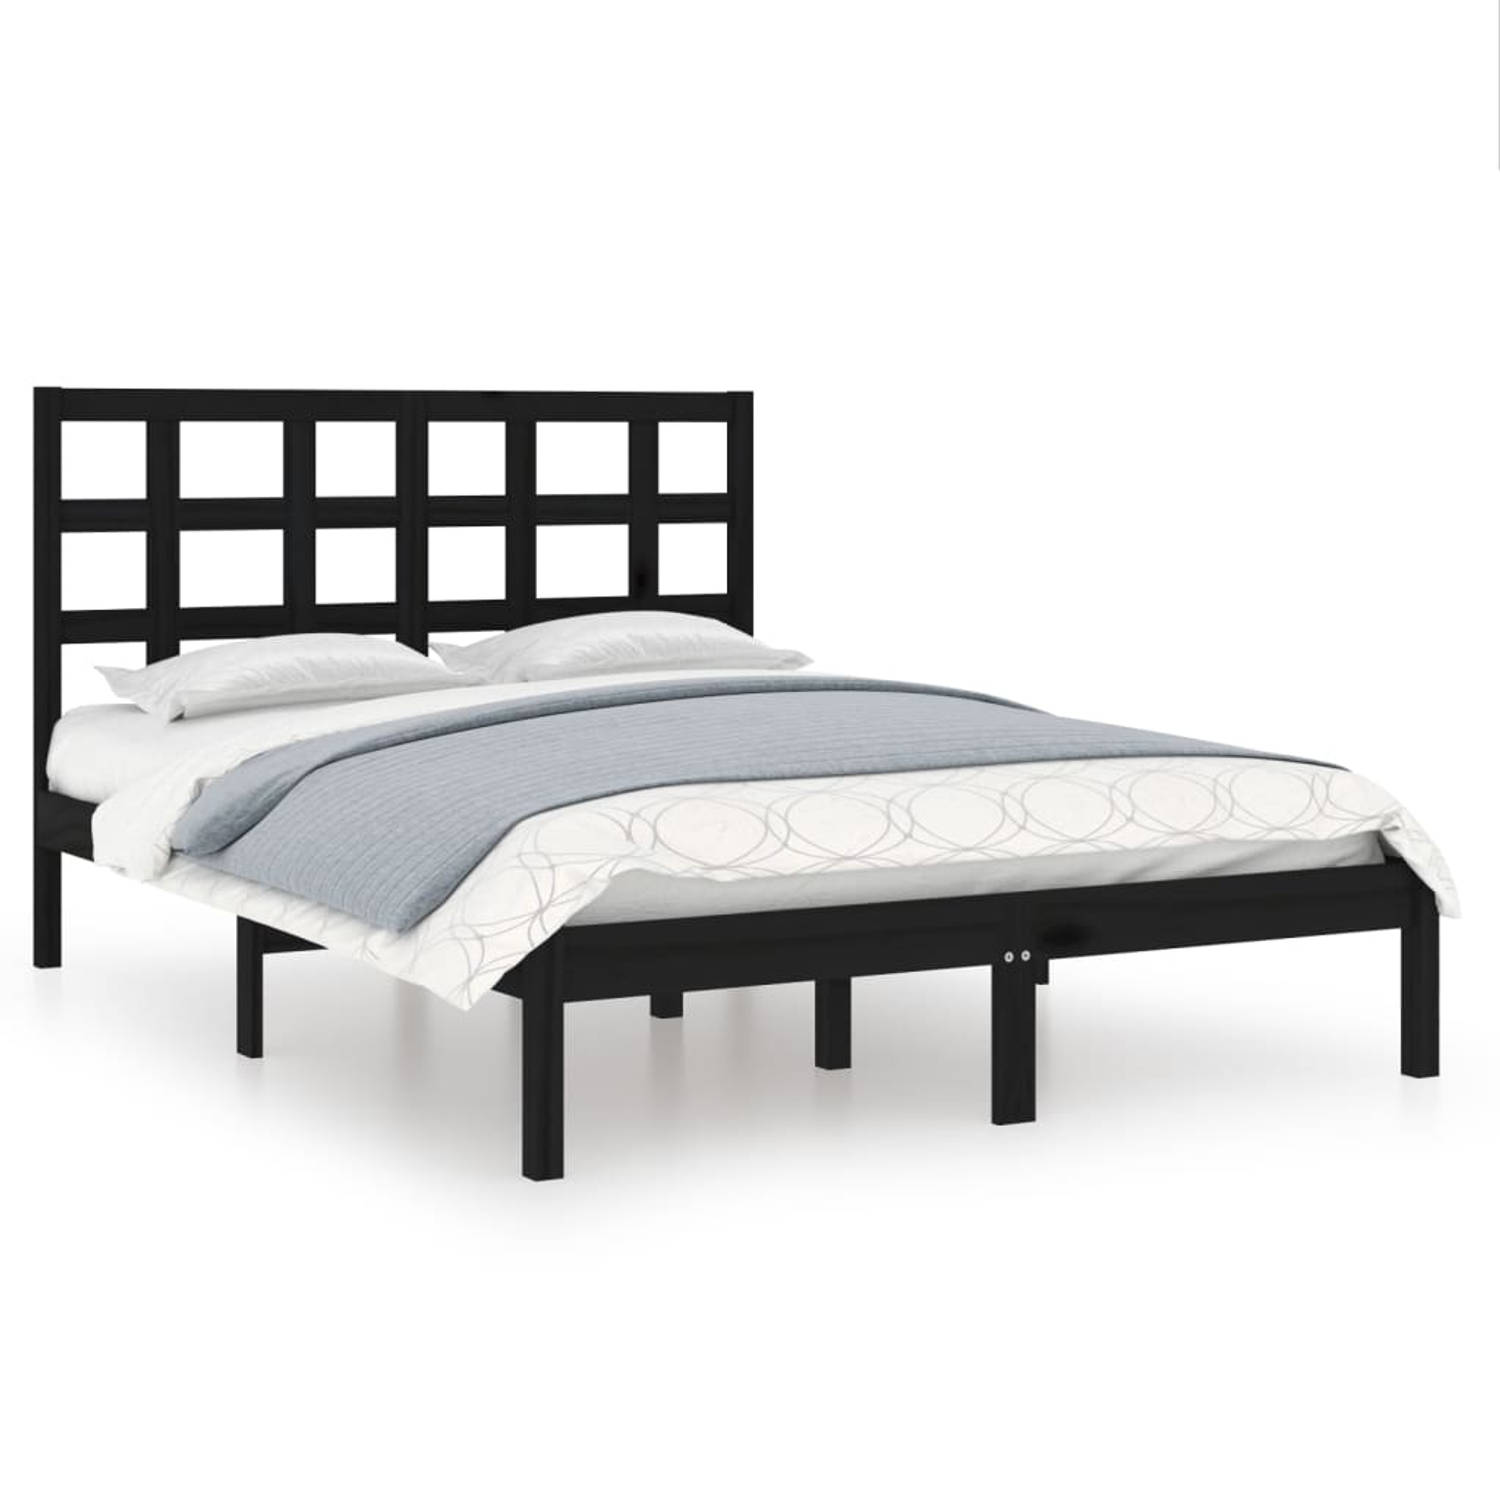 The Living Store Bedframe massief hout zwart 120x200 cm - Bedframe - Bedframes - Tweepersoonsbed - Bed - Bedombouw - Dubbel Bed - Frame - Bed Frame - Ledikant - Houten Bedframe - T